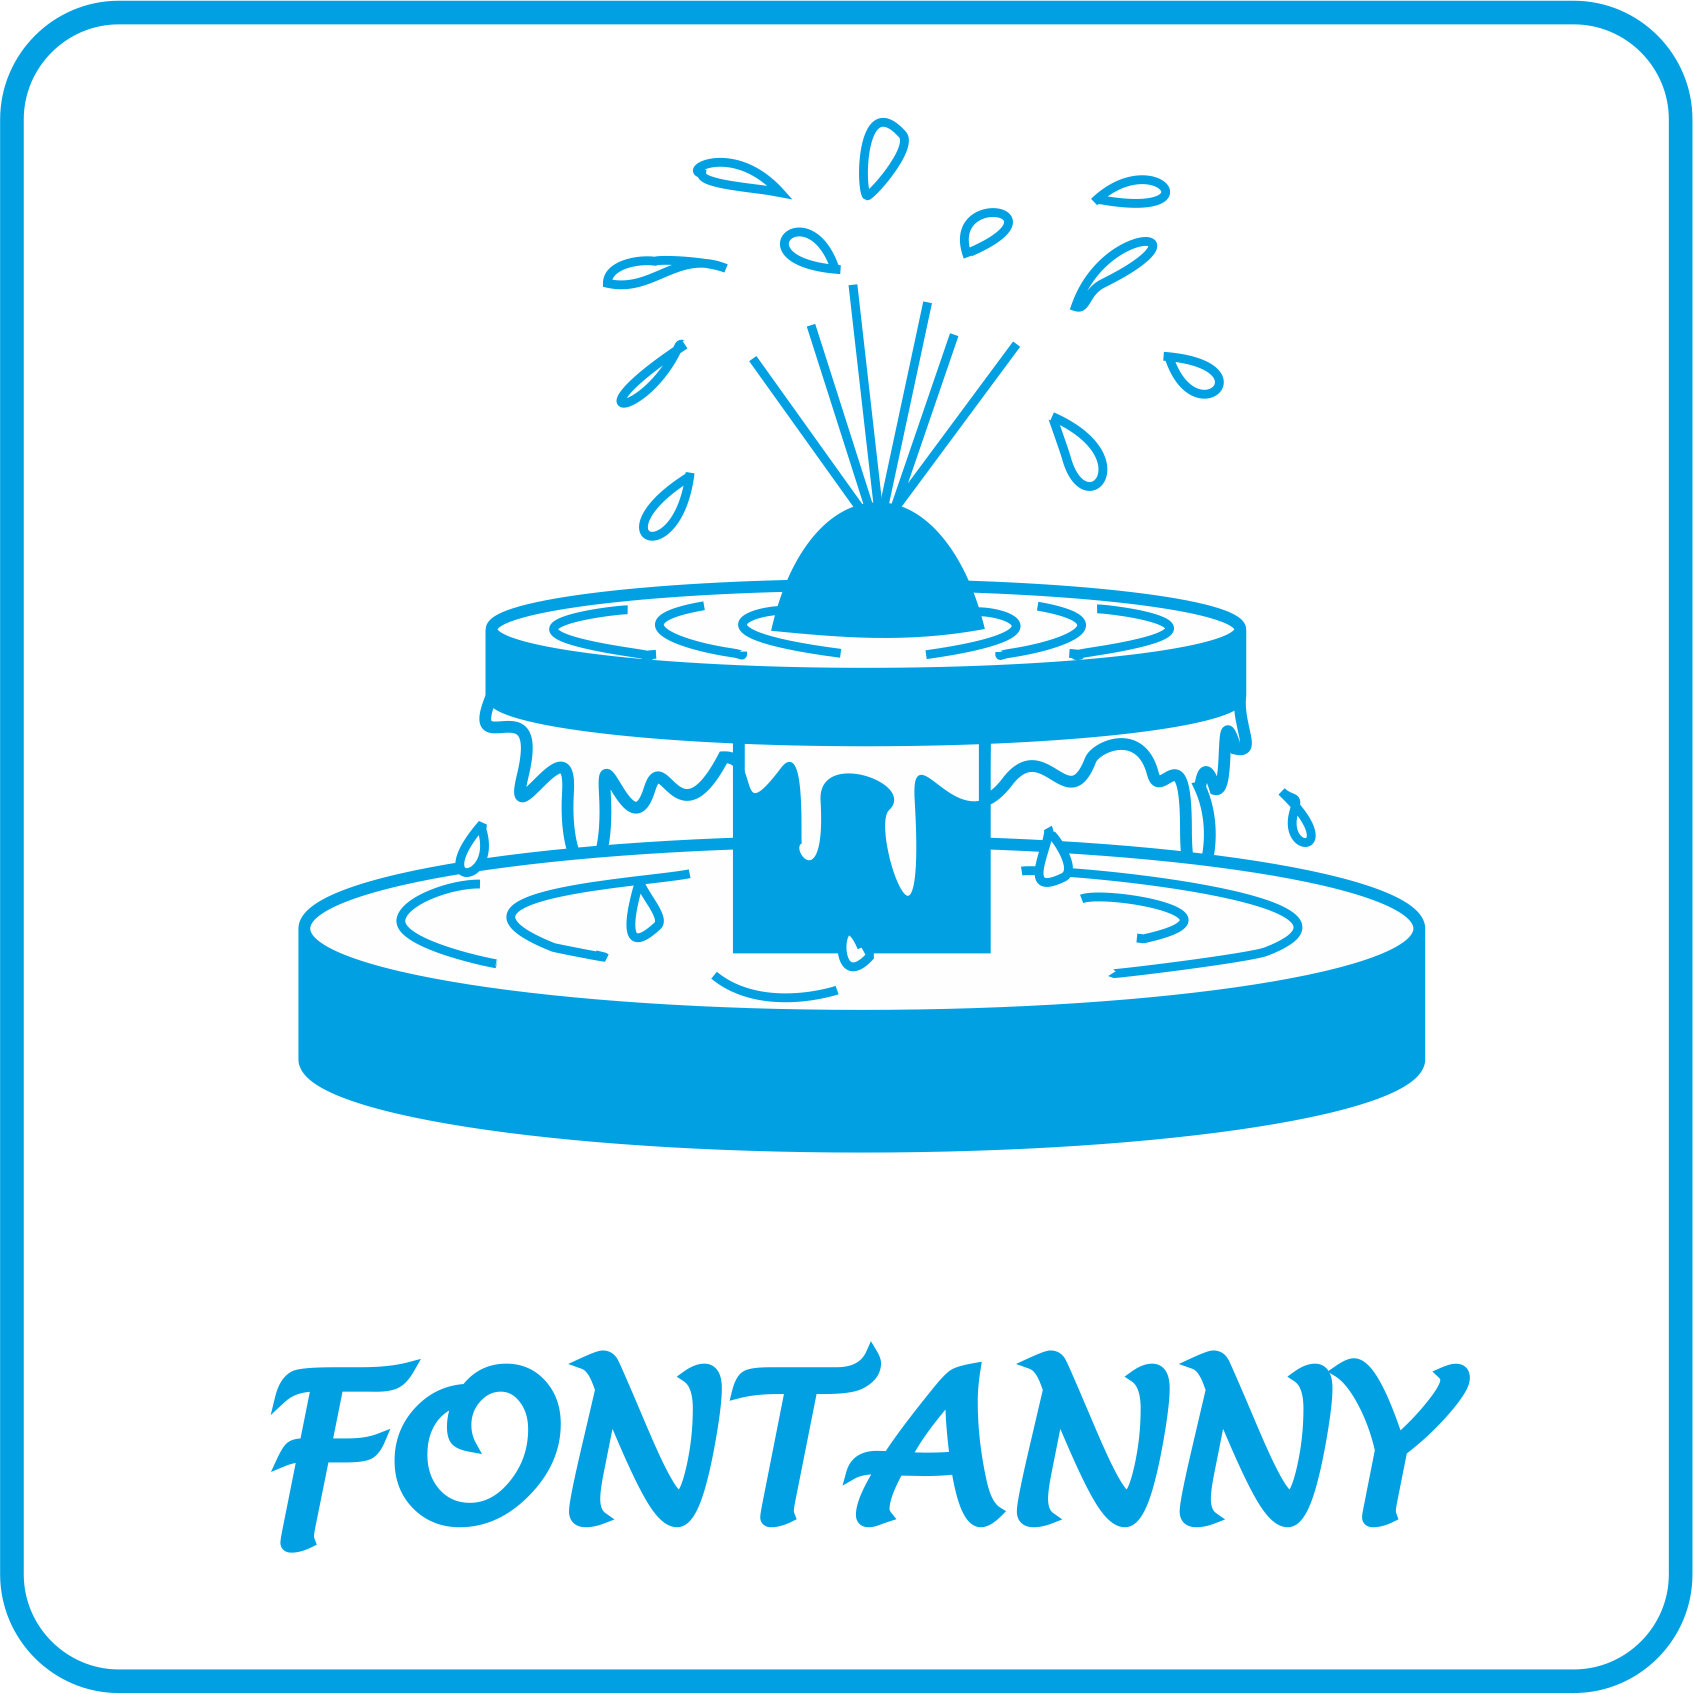 Fontanny